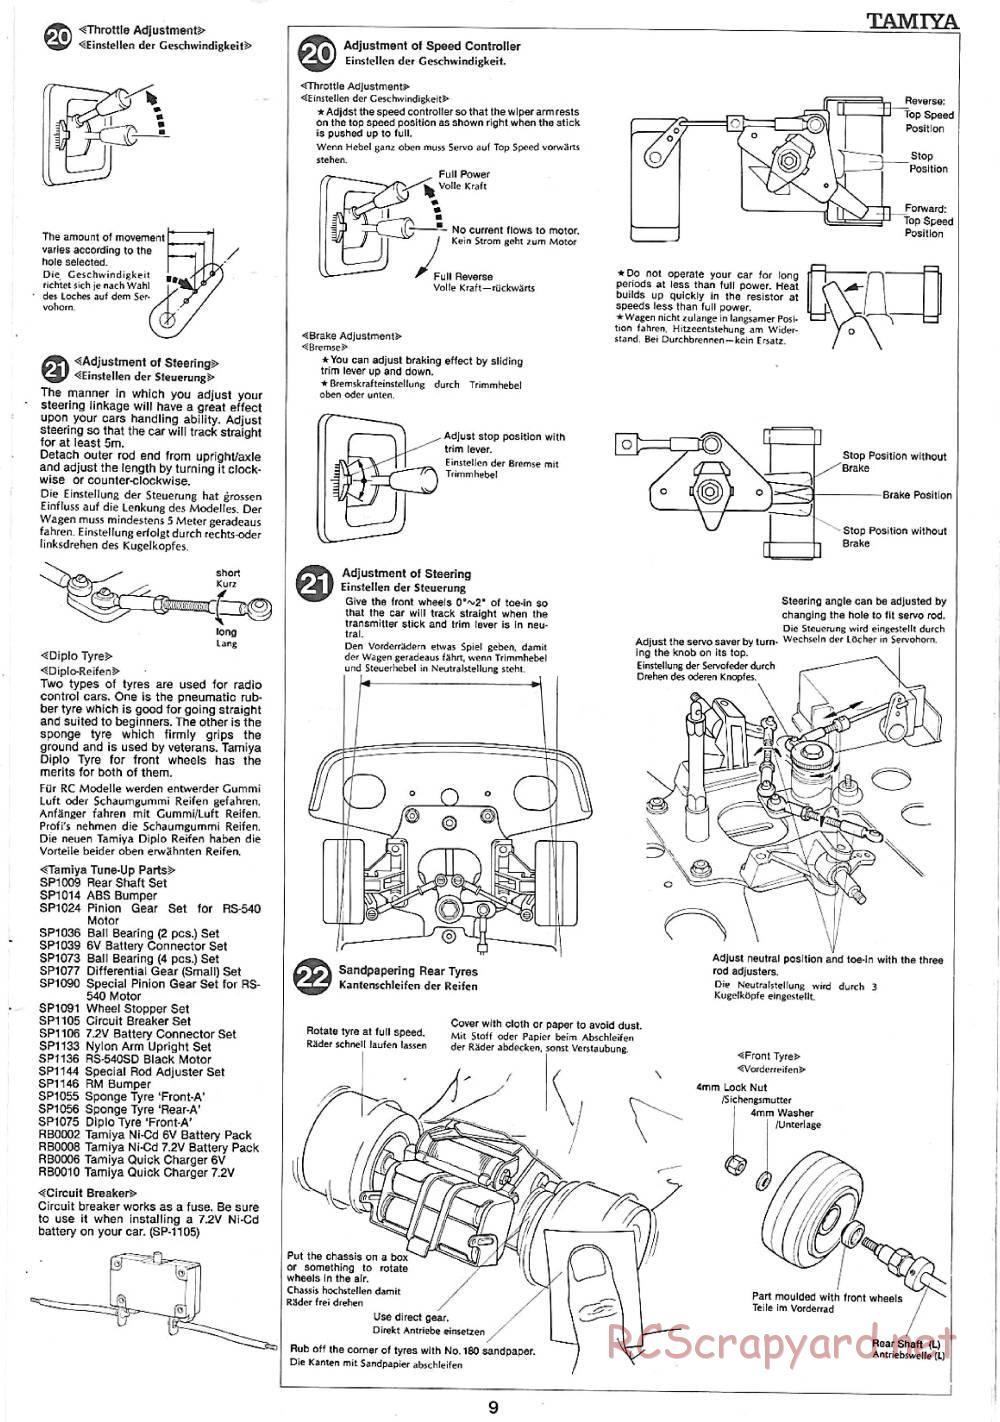 Tamiya - VW Golf Racing Group 2 (CS) - 58025 - Manual - Page 9